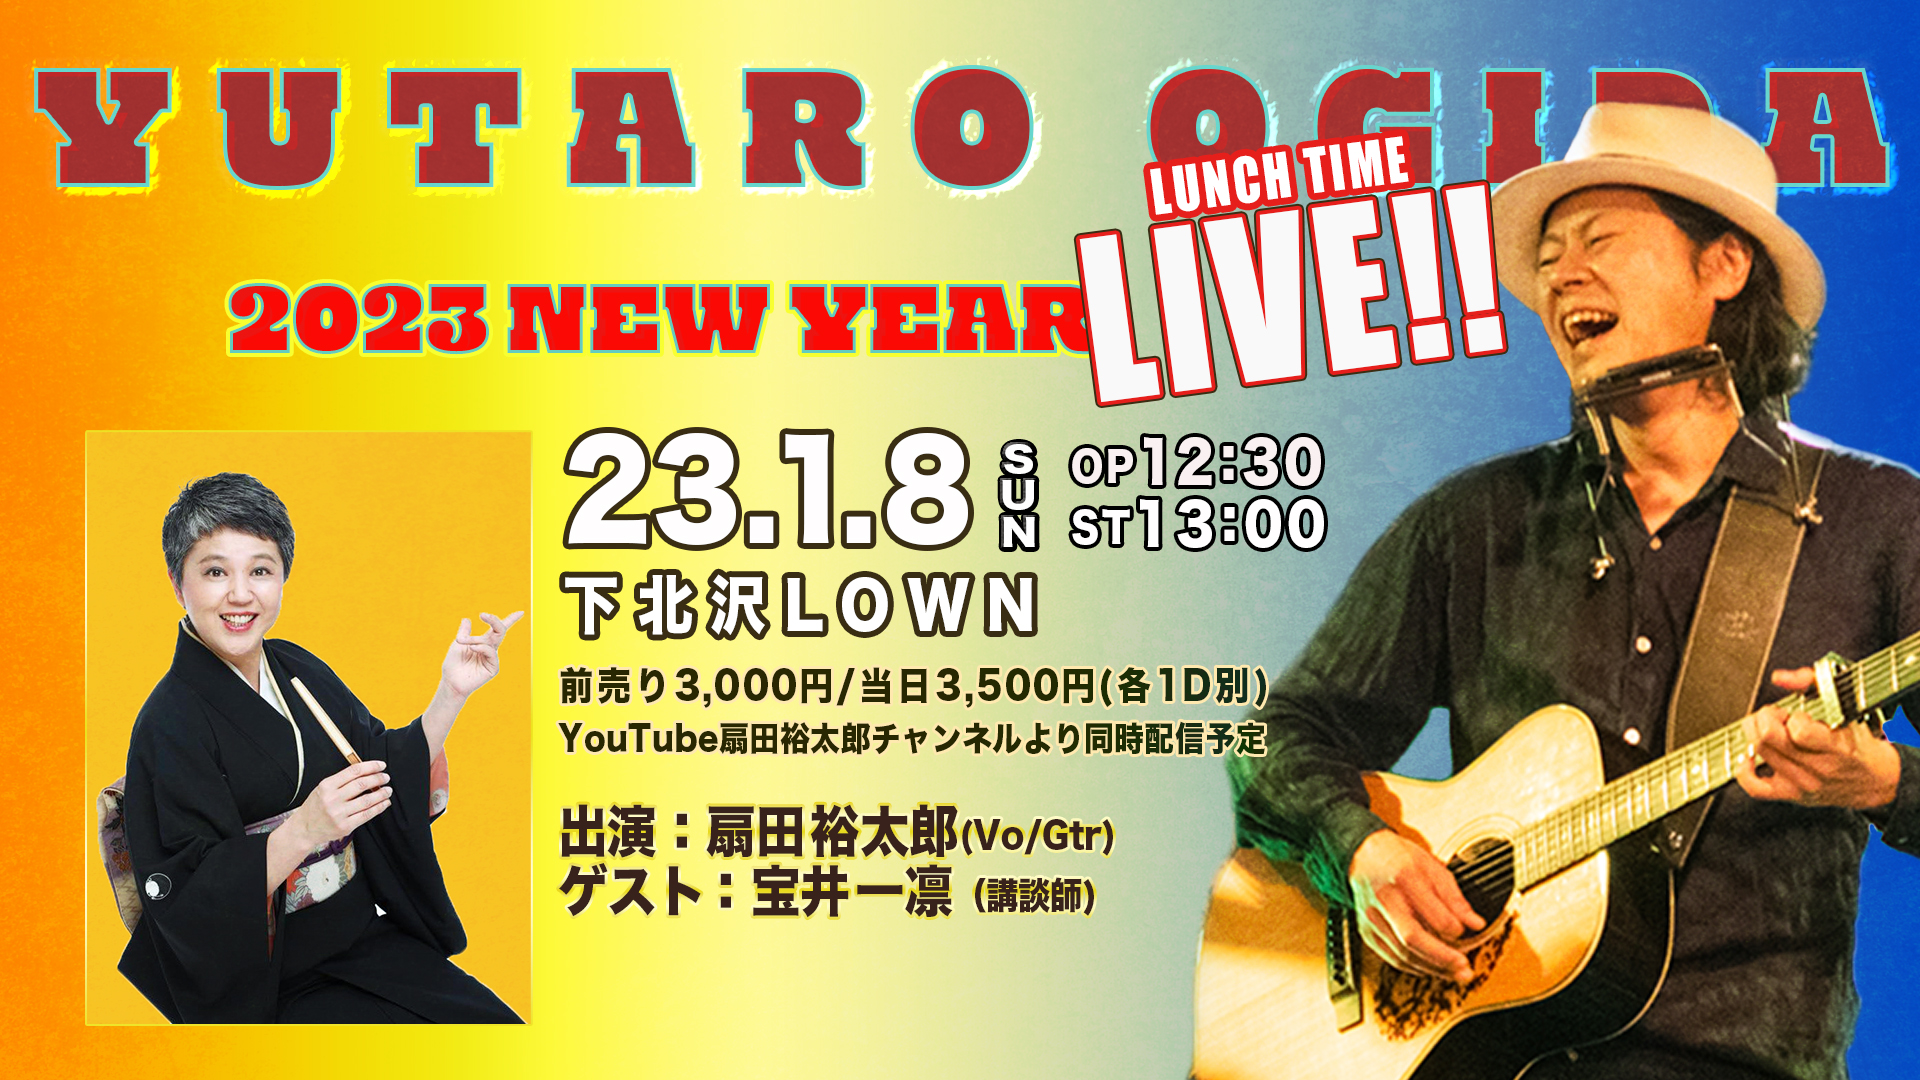 「YUTARO OGIDA 2023 NEW YEAR LUNCH LIVE!!」